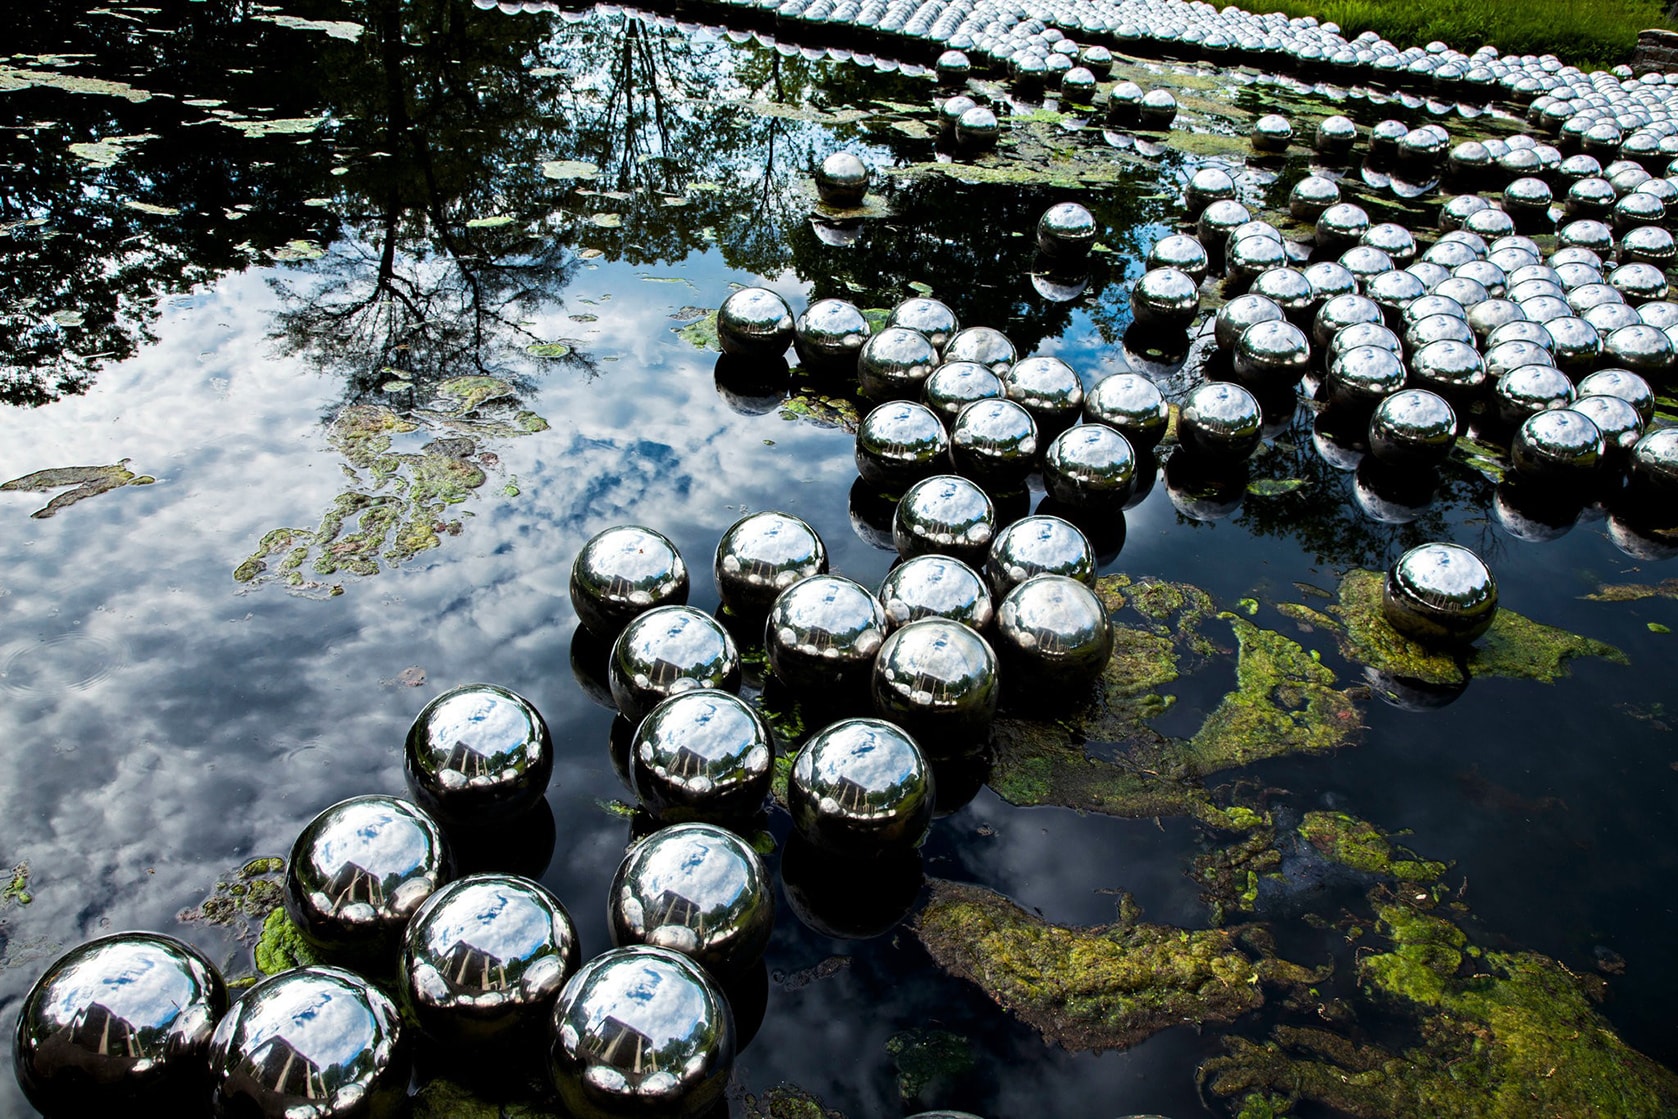 Yayoi Kusama Narcissus Garden Rockaways July 1 1,500 Mirrored Stainless Steel Spheres Artwork Art MoMA PS1 New York Queens Fort Tilden Klaus Biesenbach